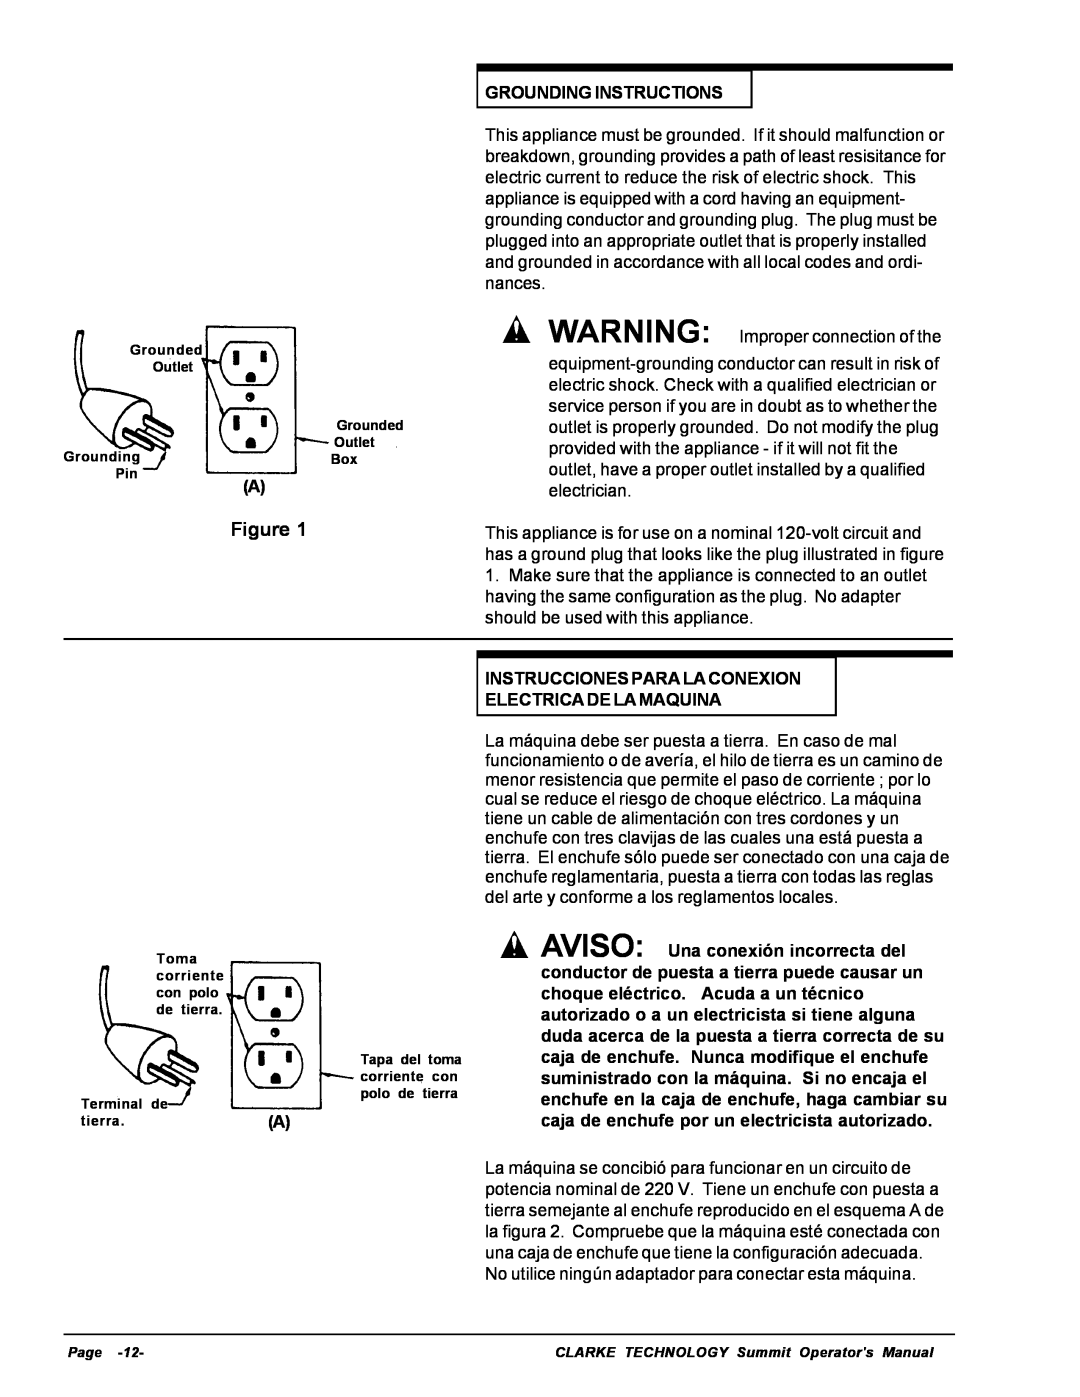 Nilfisk-ALTO Wet/Dry Vacuum Grounding Instructions, Instrucciones Para La Conexion, Electrica De La Maquina 